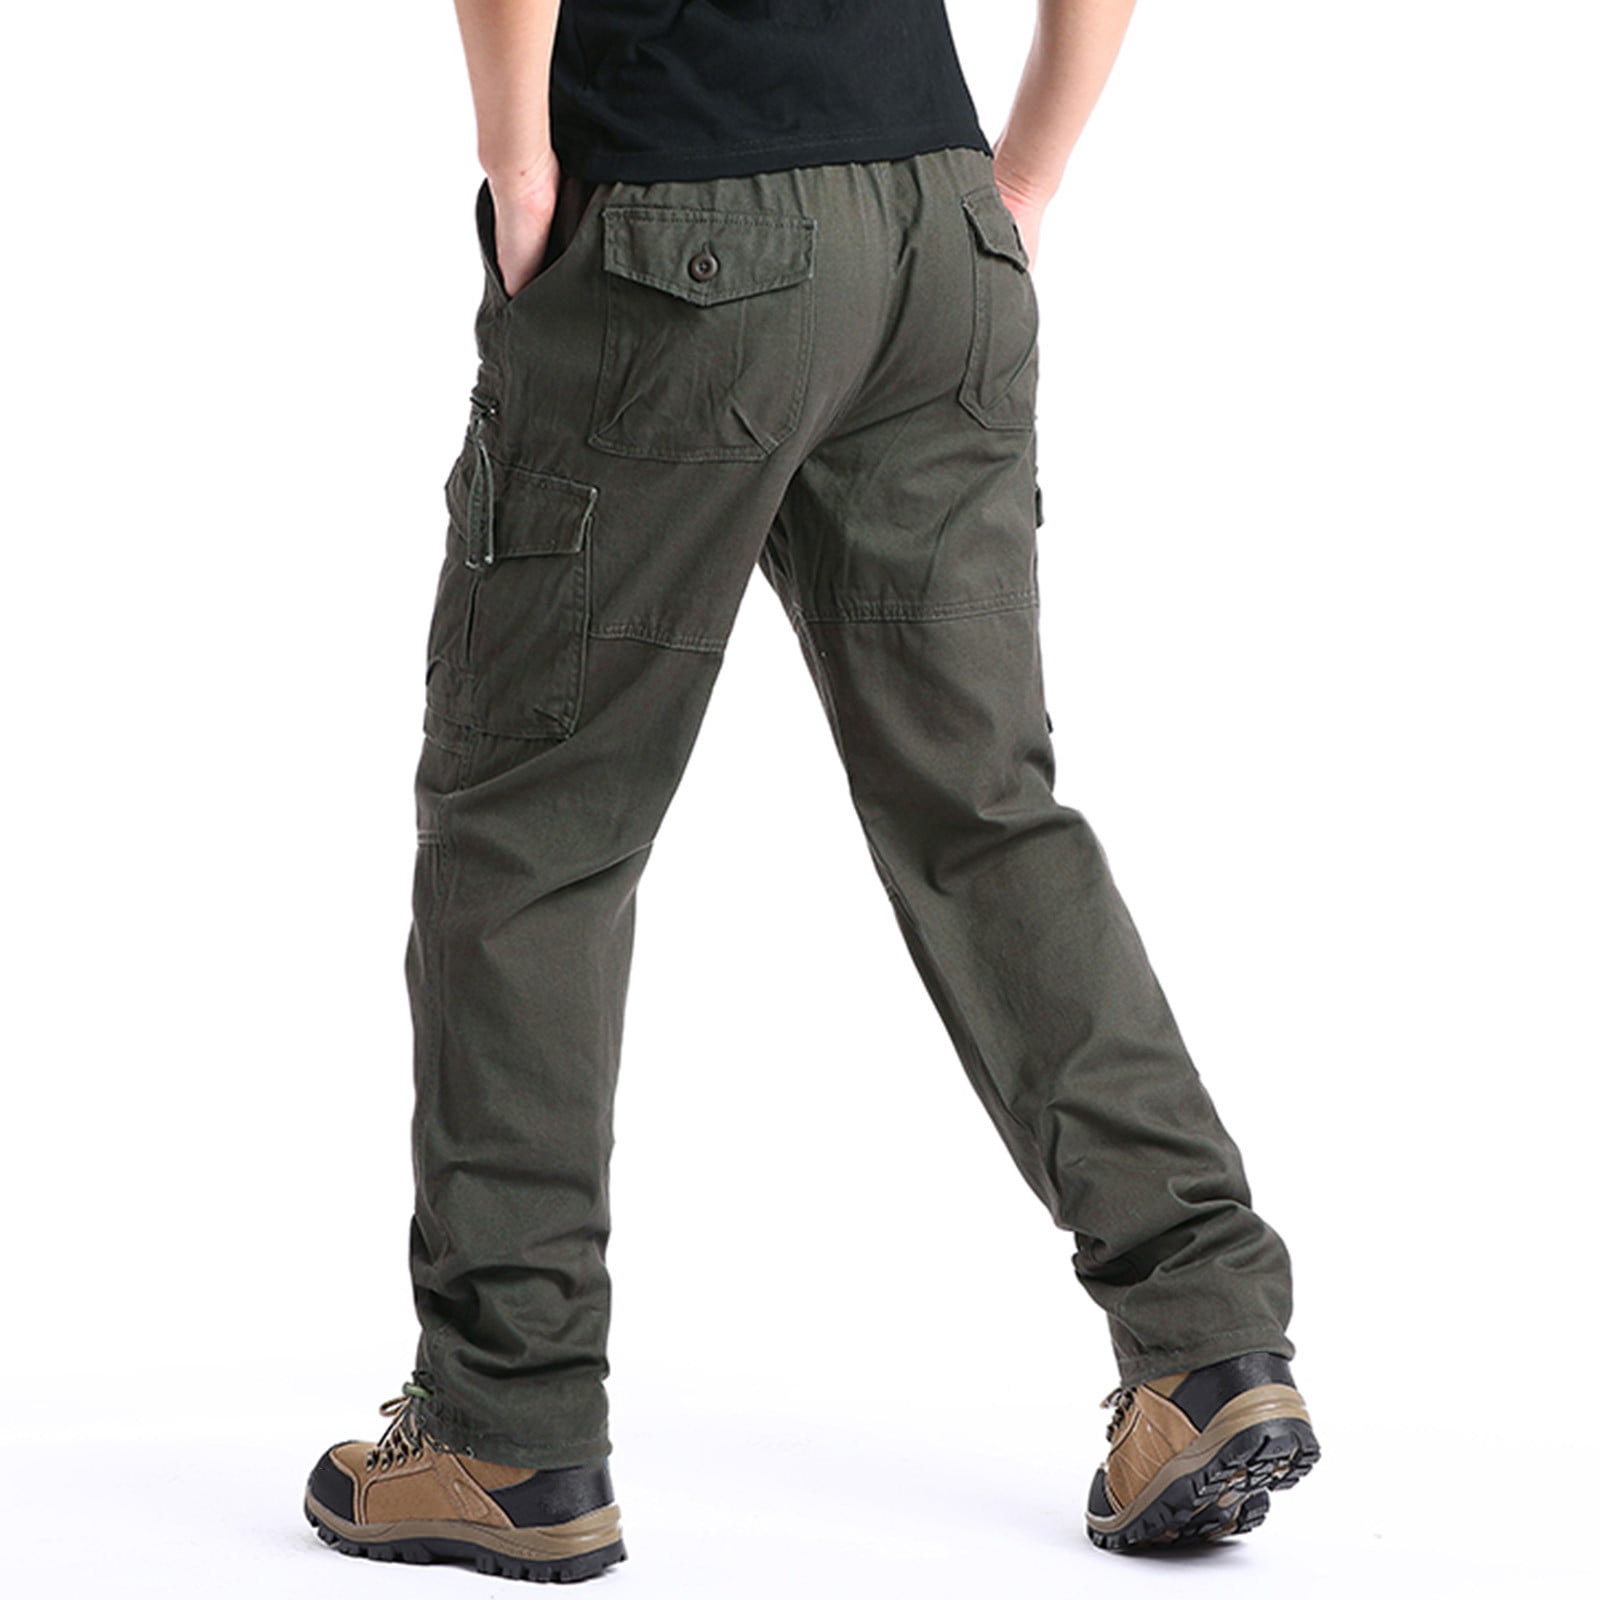 LEEy-World Work Pants for Men Men's Cargo Pants with Pockets